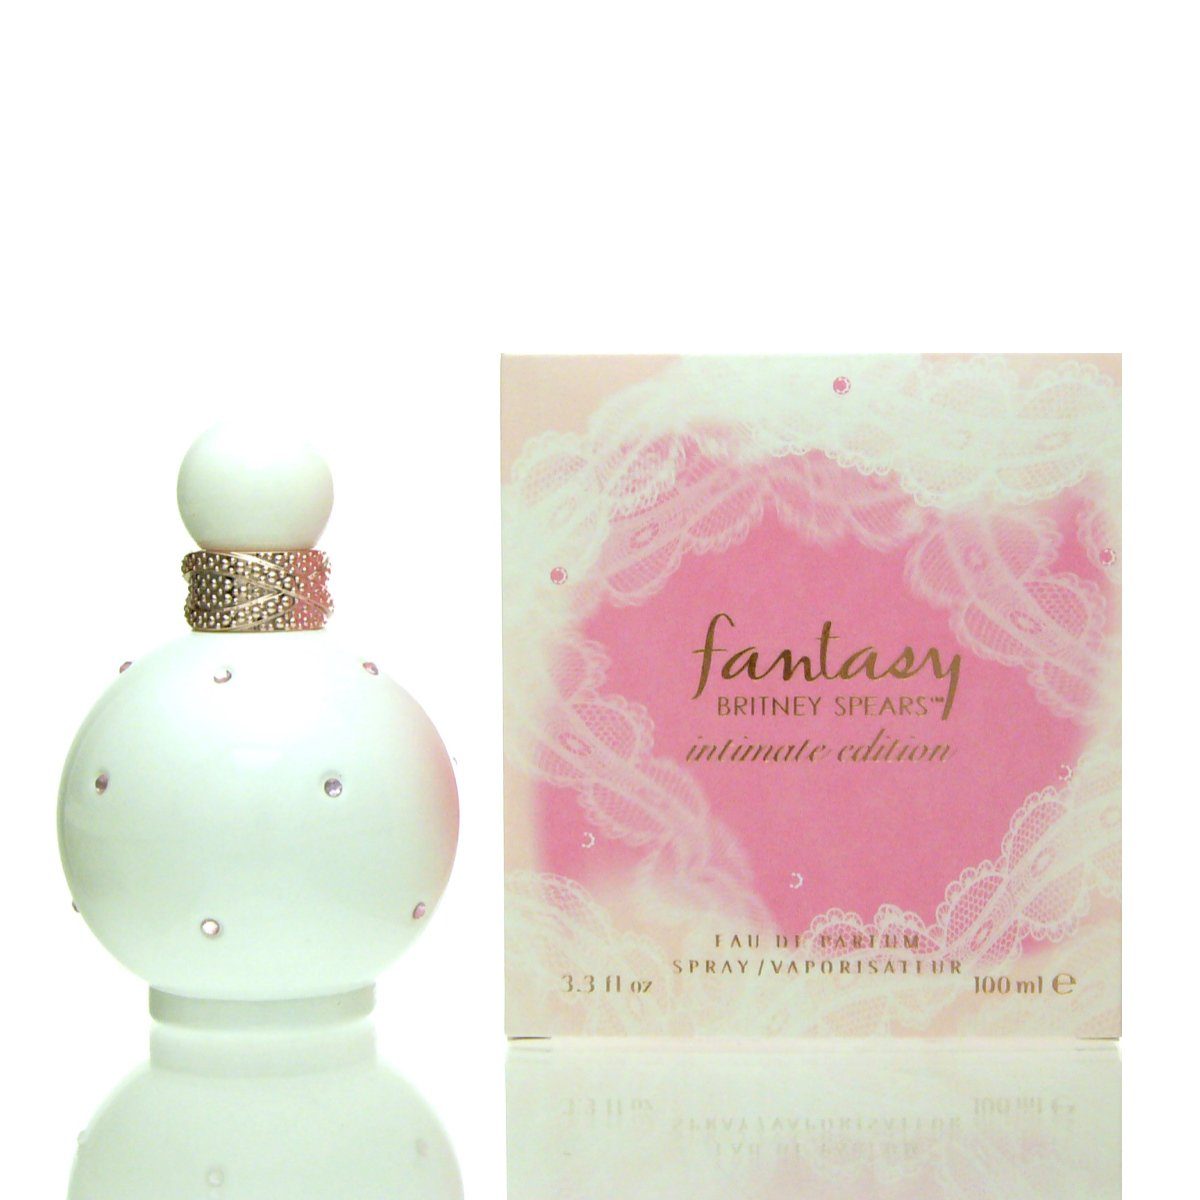 Britney Spears Eau Eau Parfum Edition de de Spears Britney Fantasy Intimate